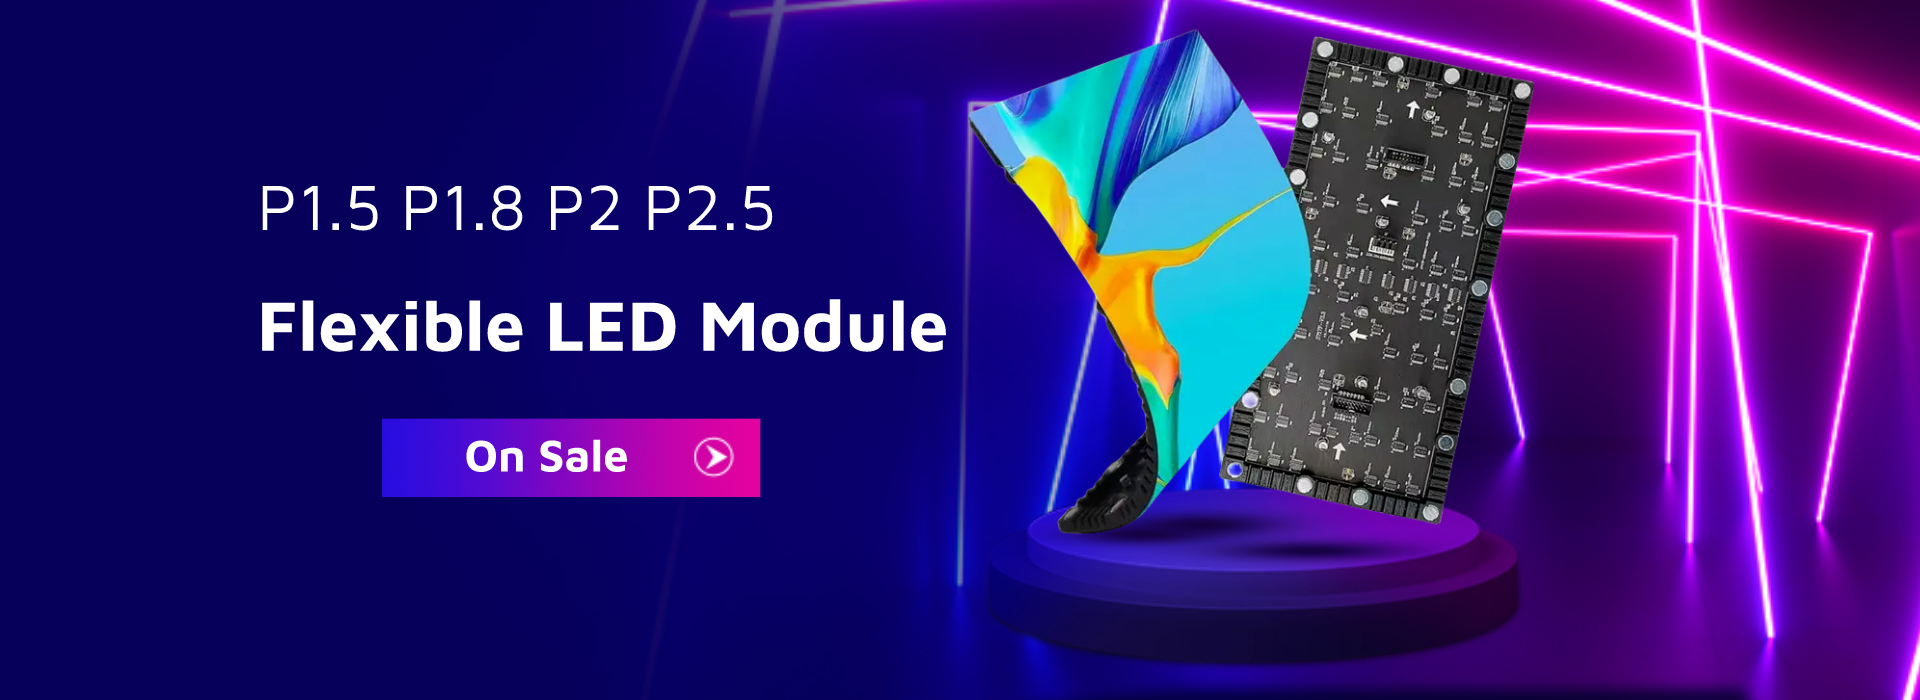 P1.5 p1.8 p2 p2.5 flexible led display module